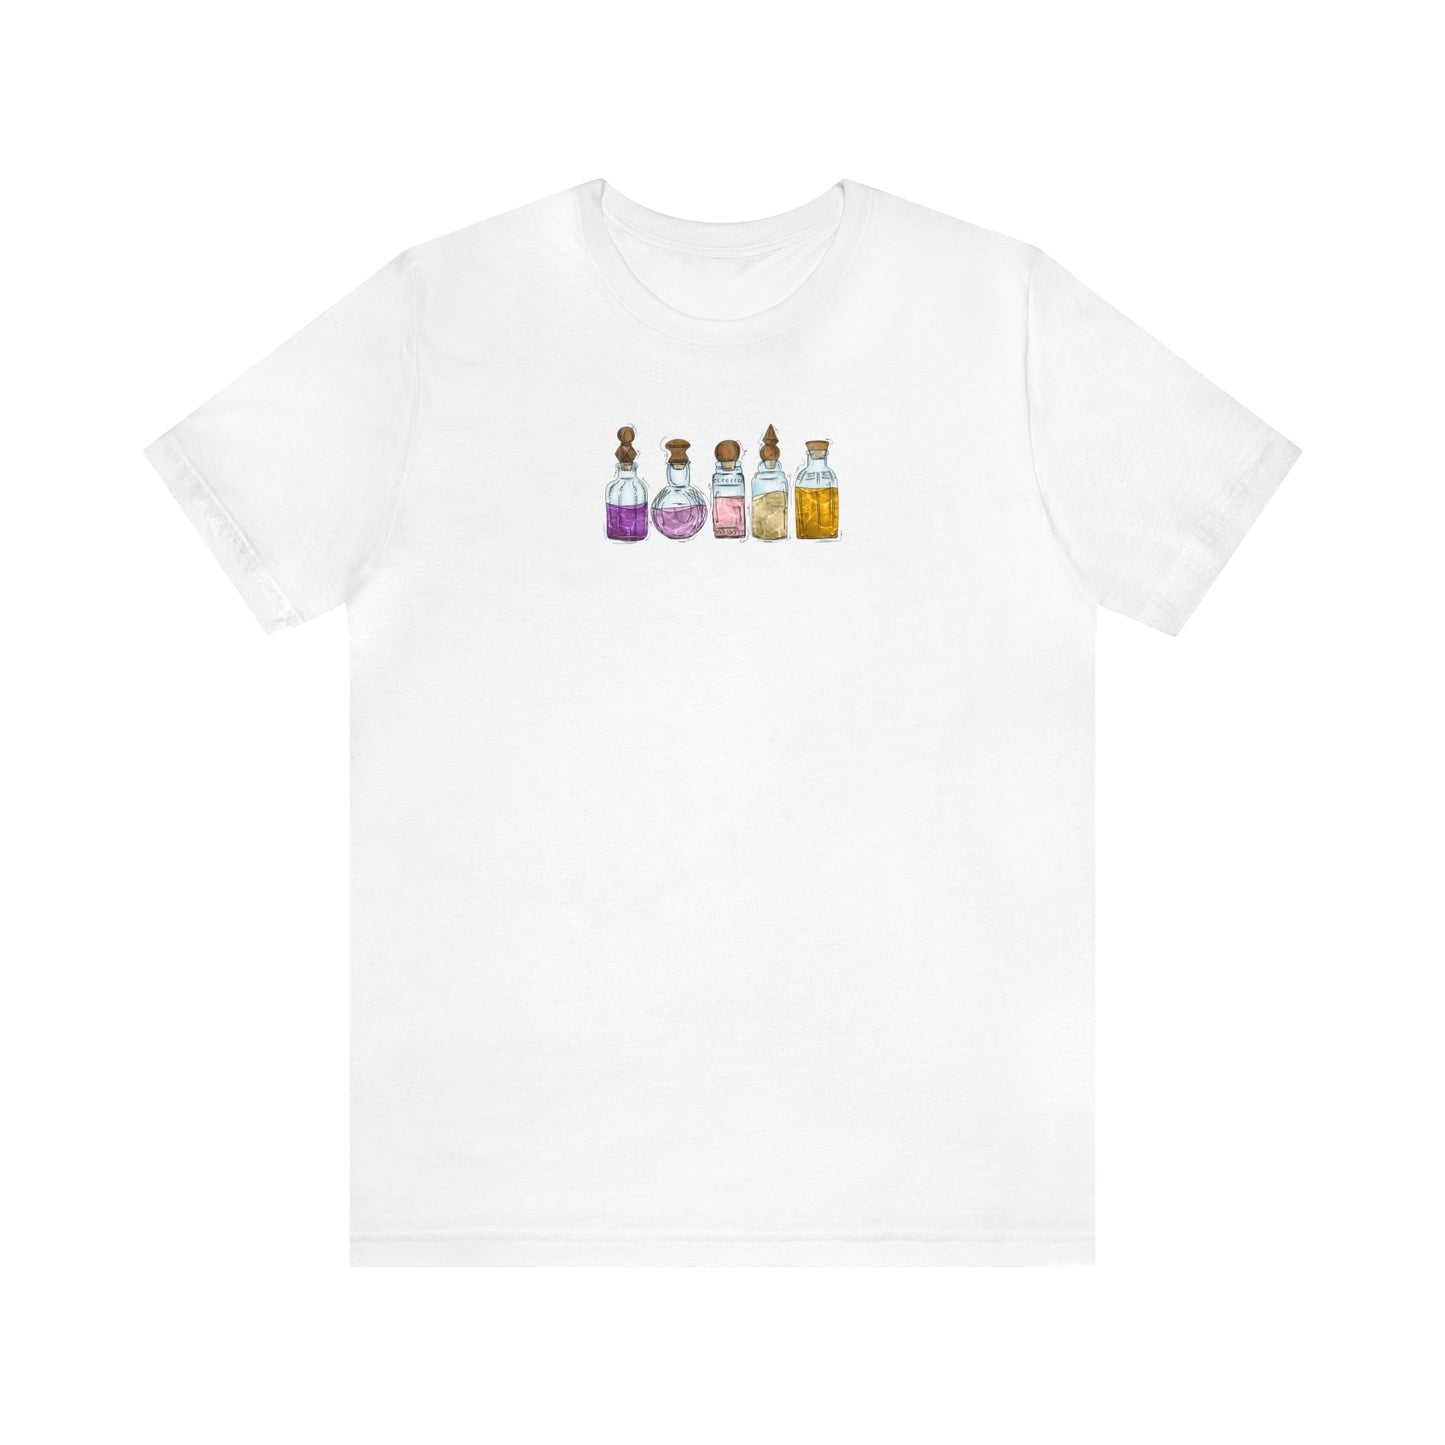 Trixic Pride Potion Bottles - Unisex T-Shirt